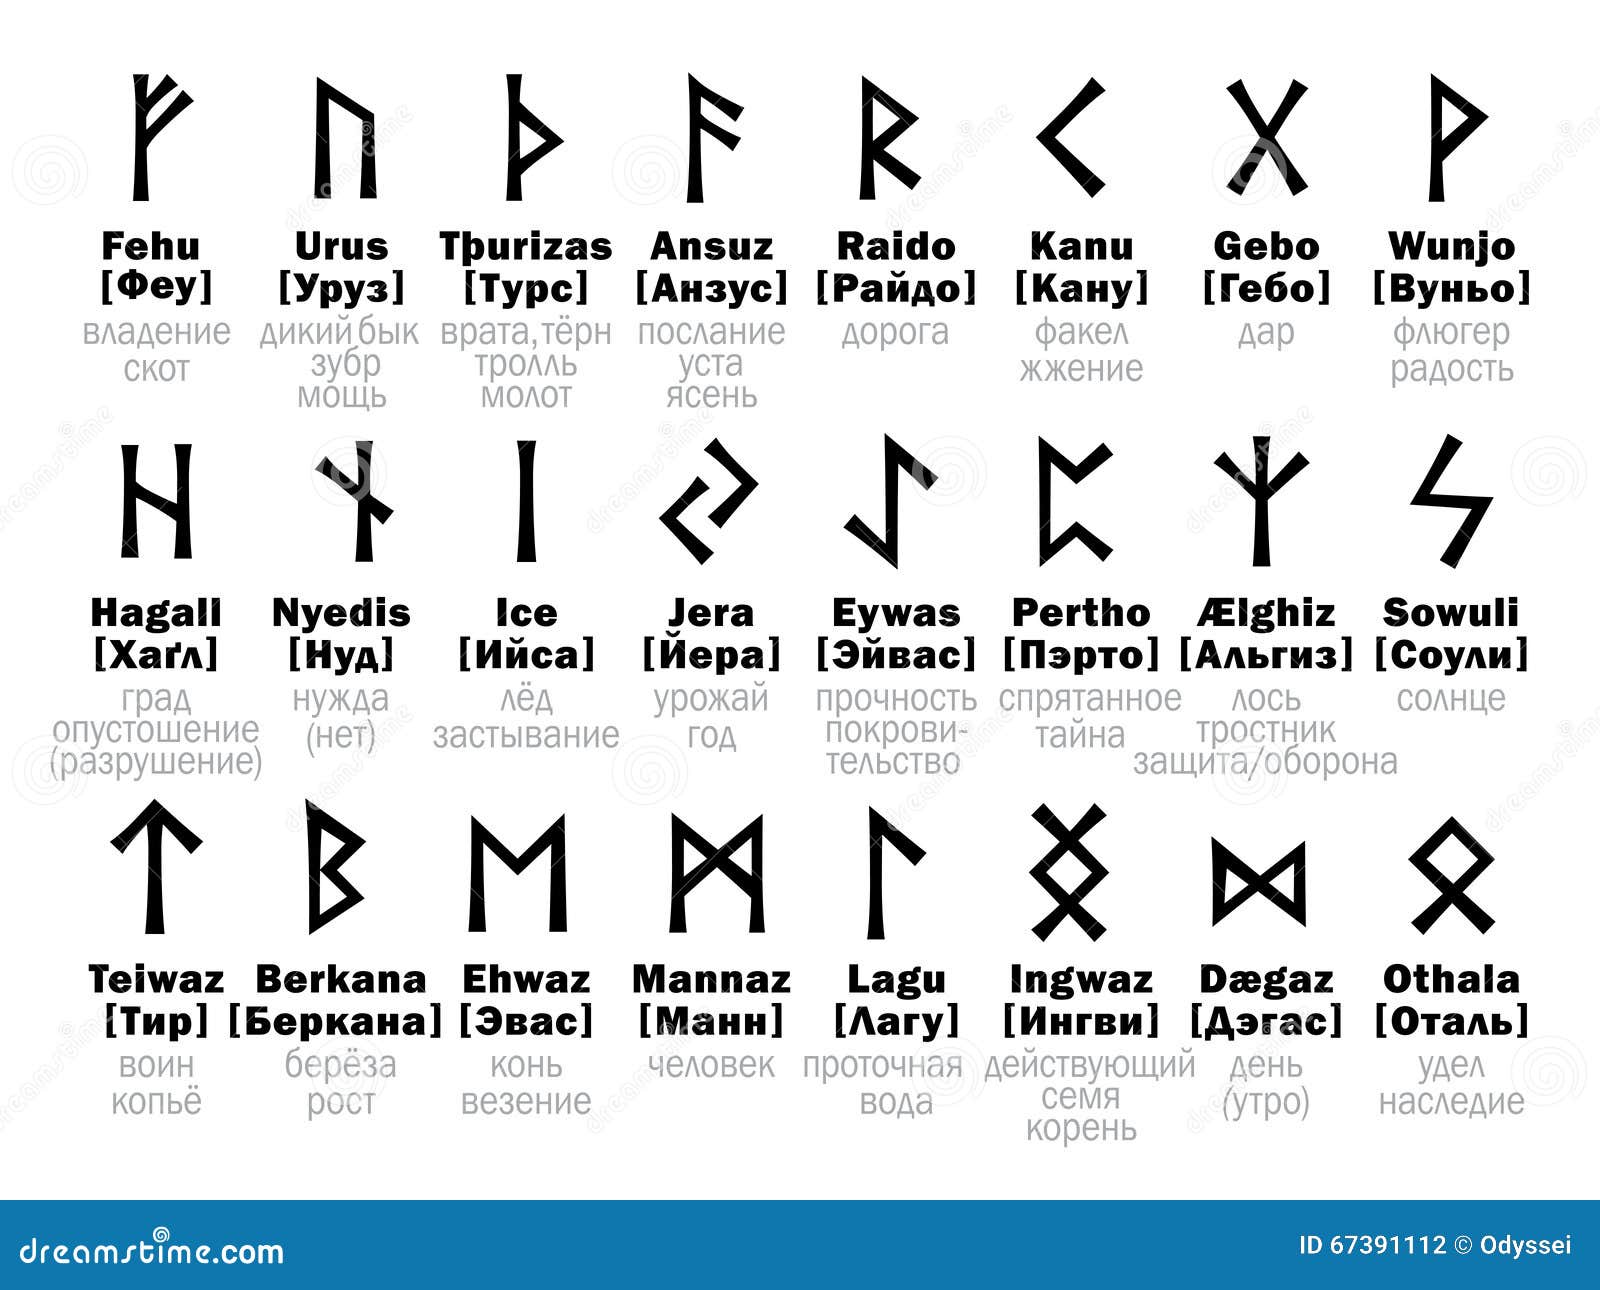 futhark runic alphabet and its russian interpretation